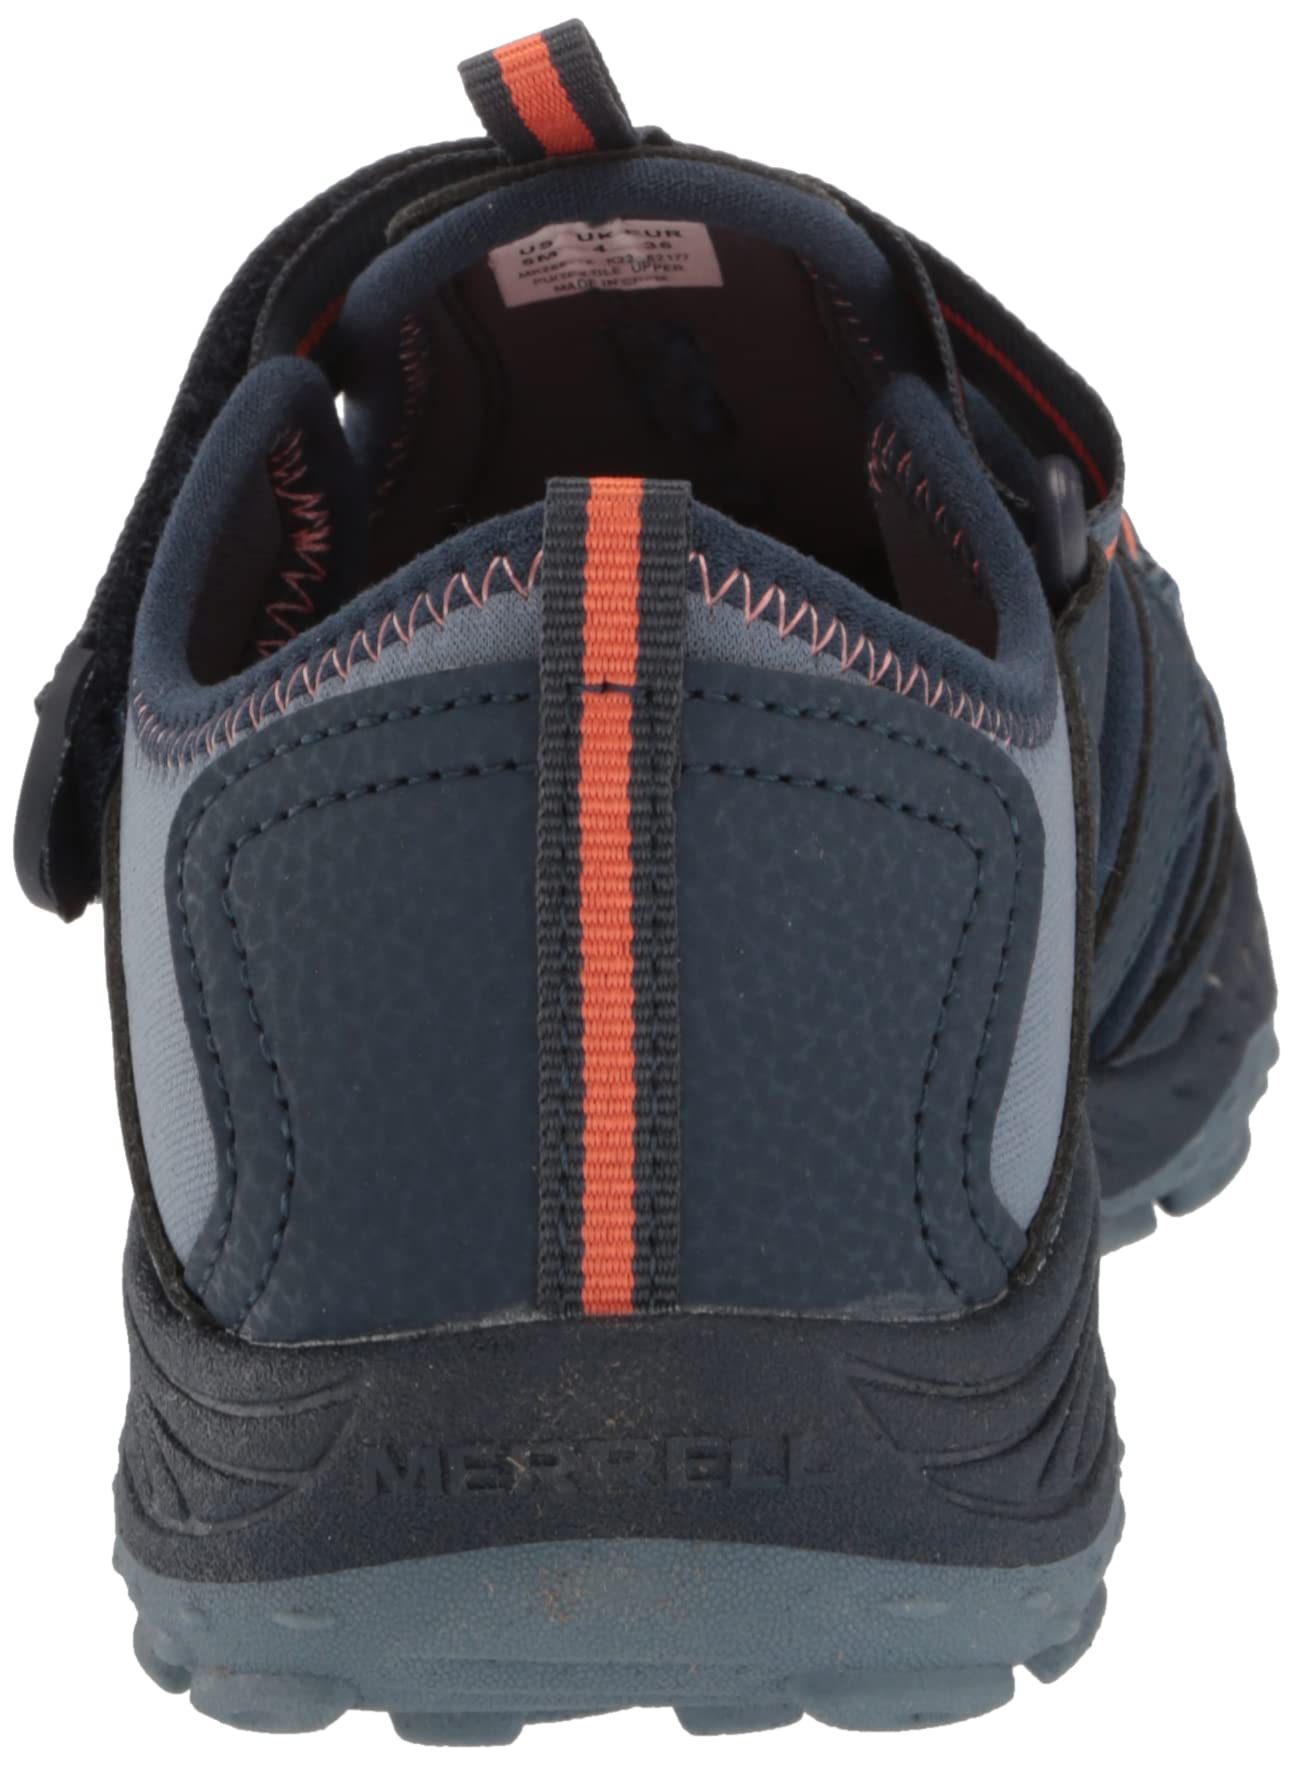 Merrell Unisex-Child Hydro 2 Sandal